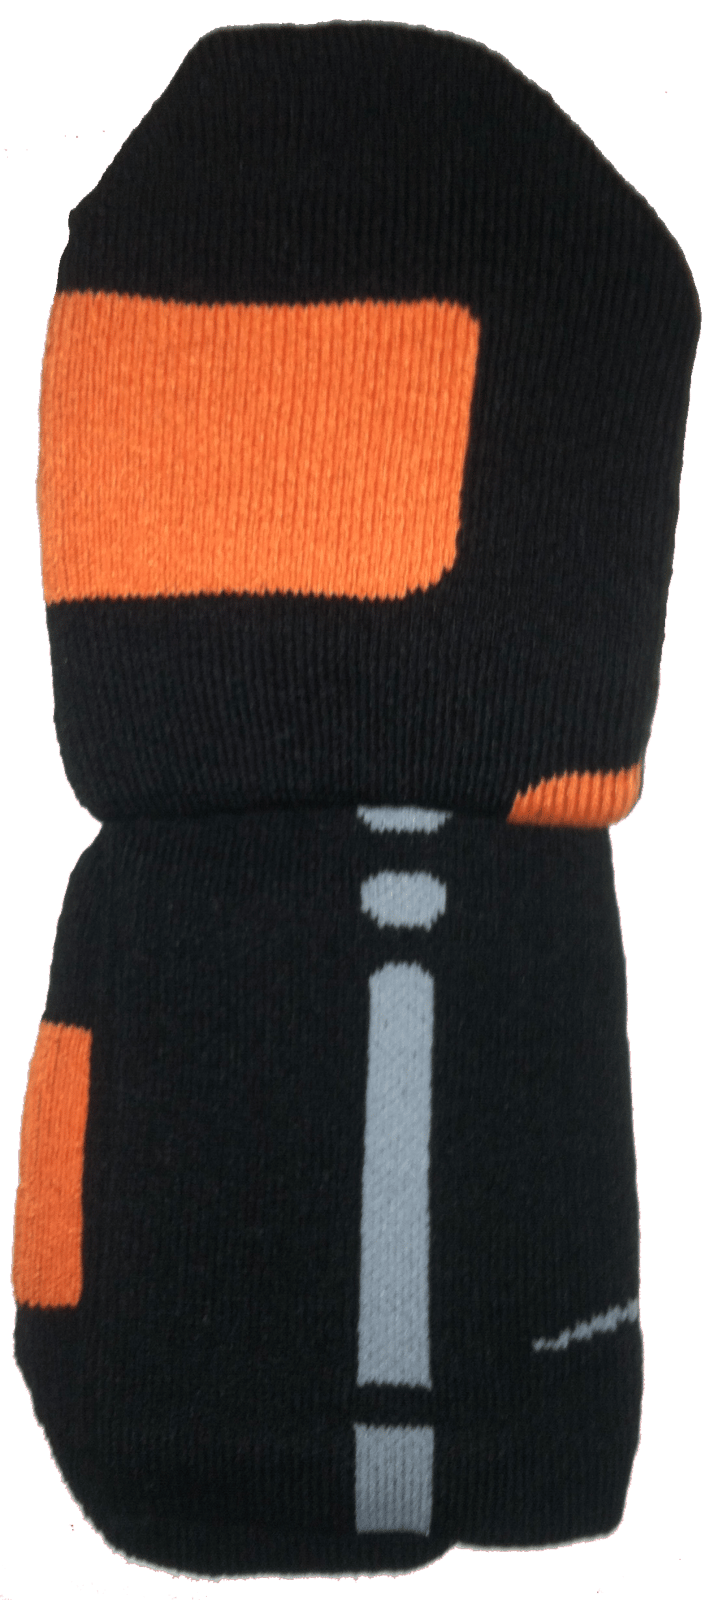 orange nike elite socks